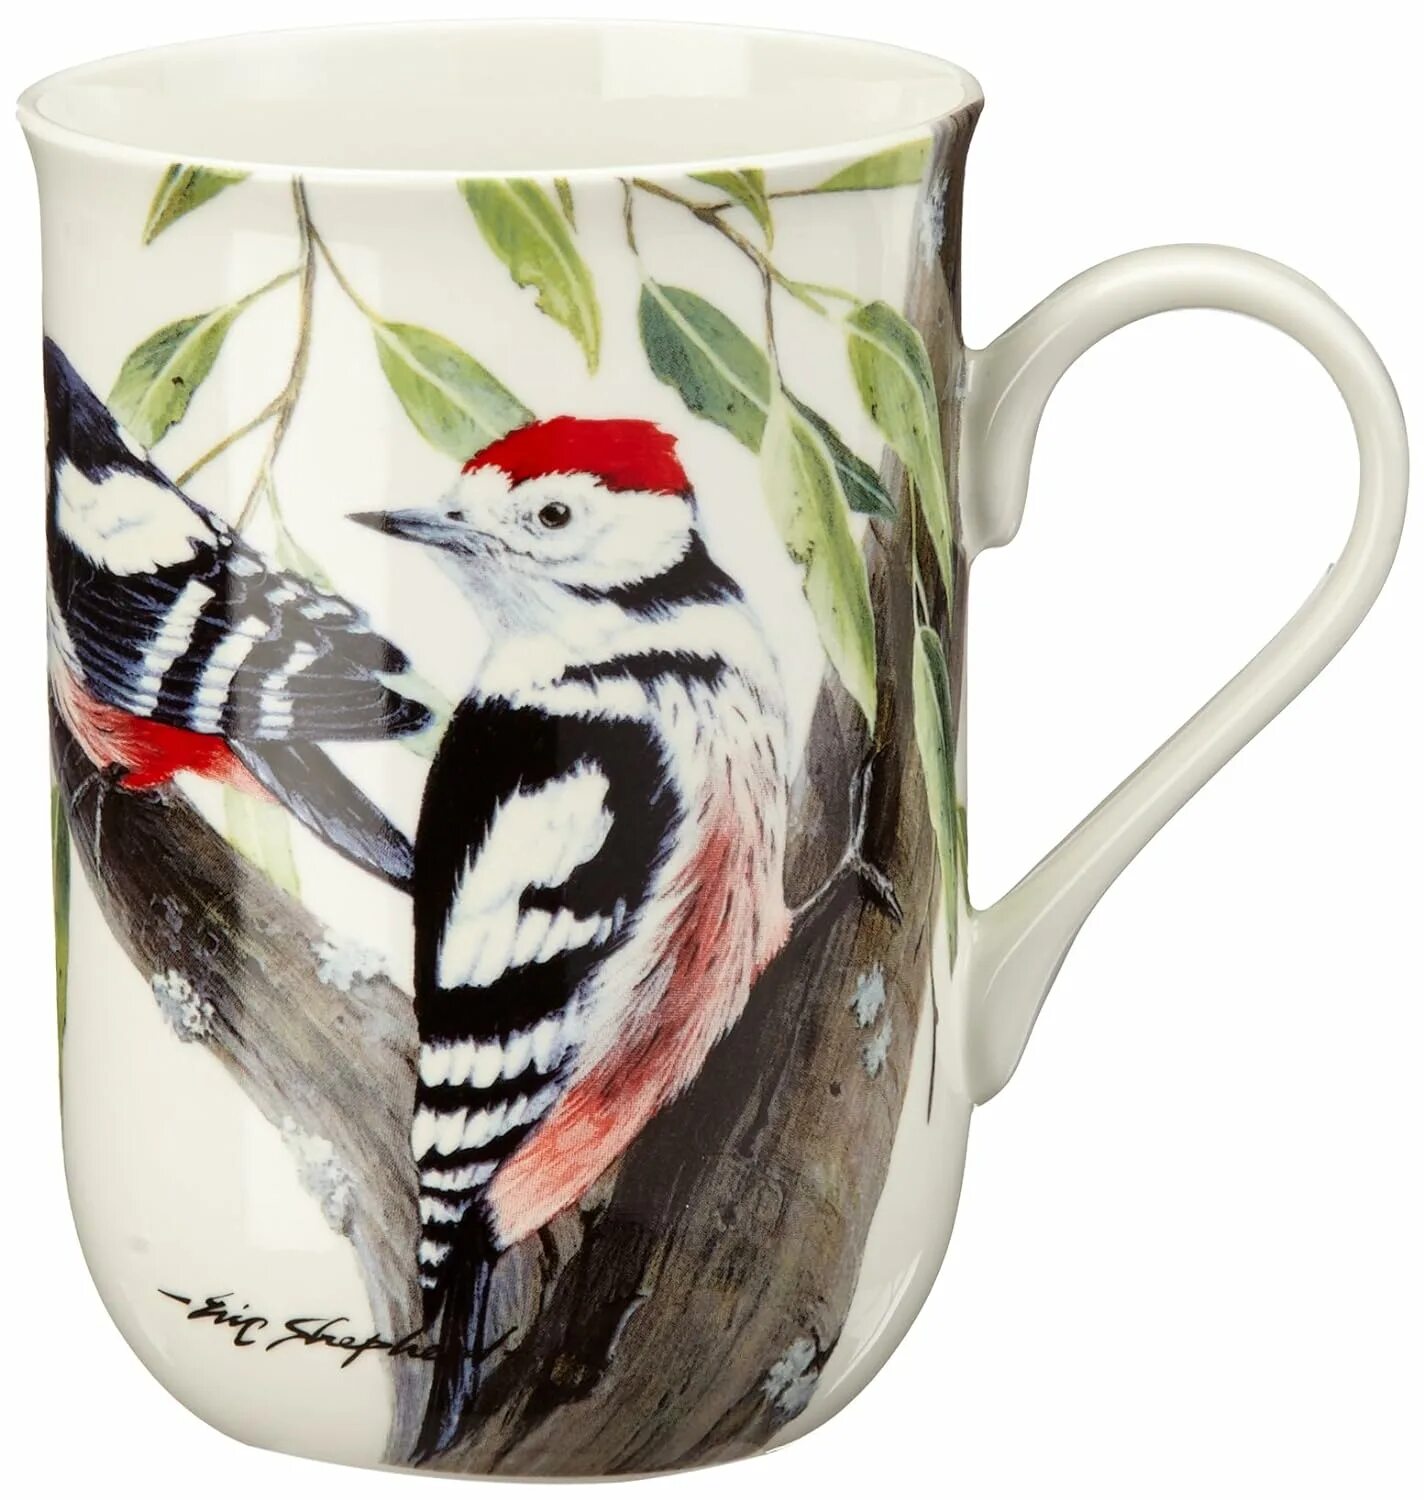 Willing bird. Maxwell Williams птицы. Чашка с птицами. Птичка и чайная чашка. Кружка птичка.